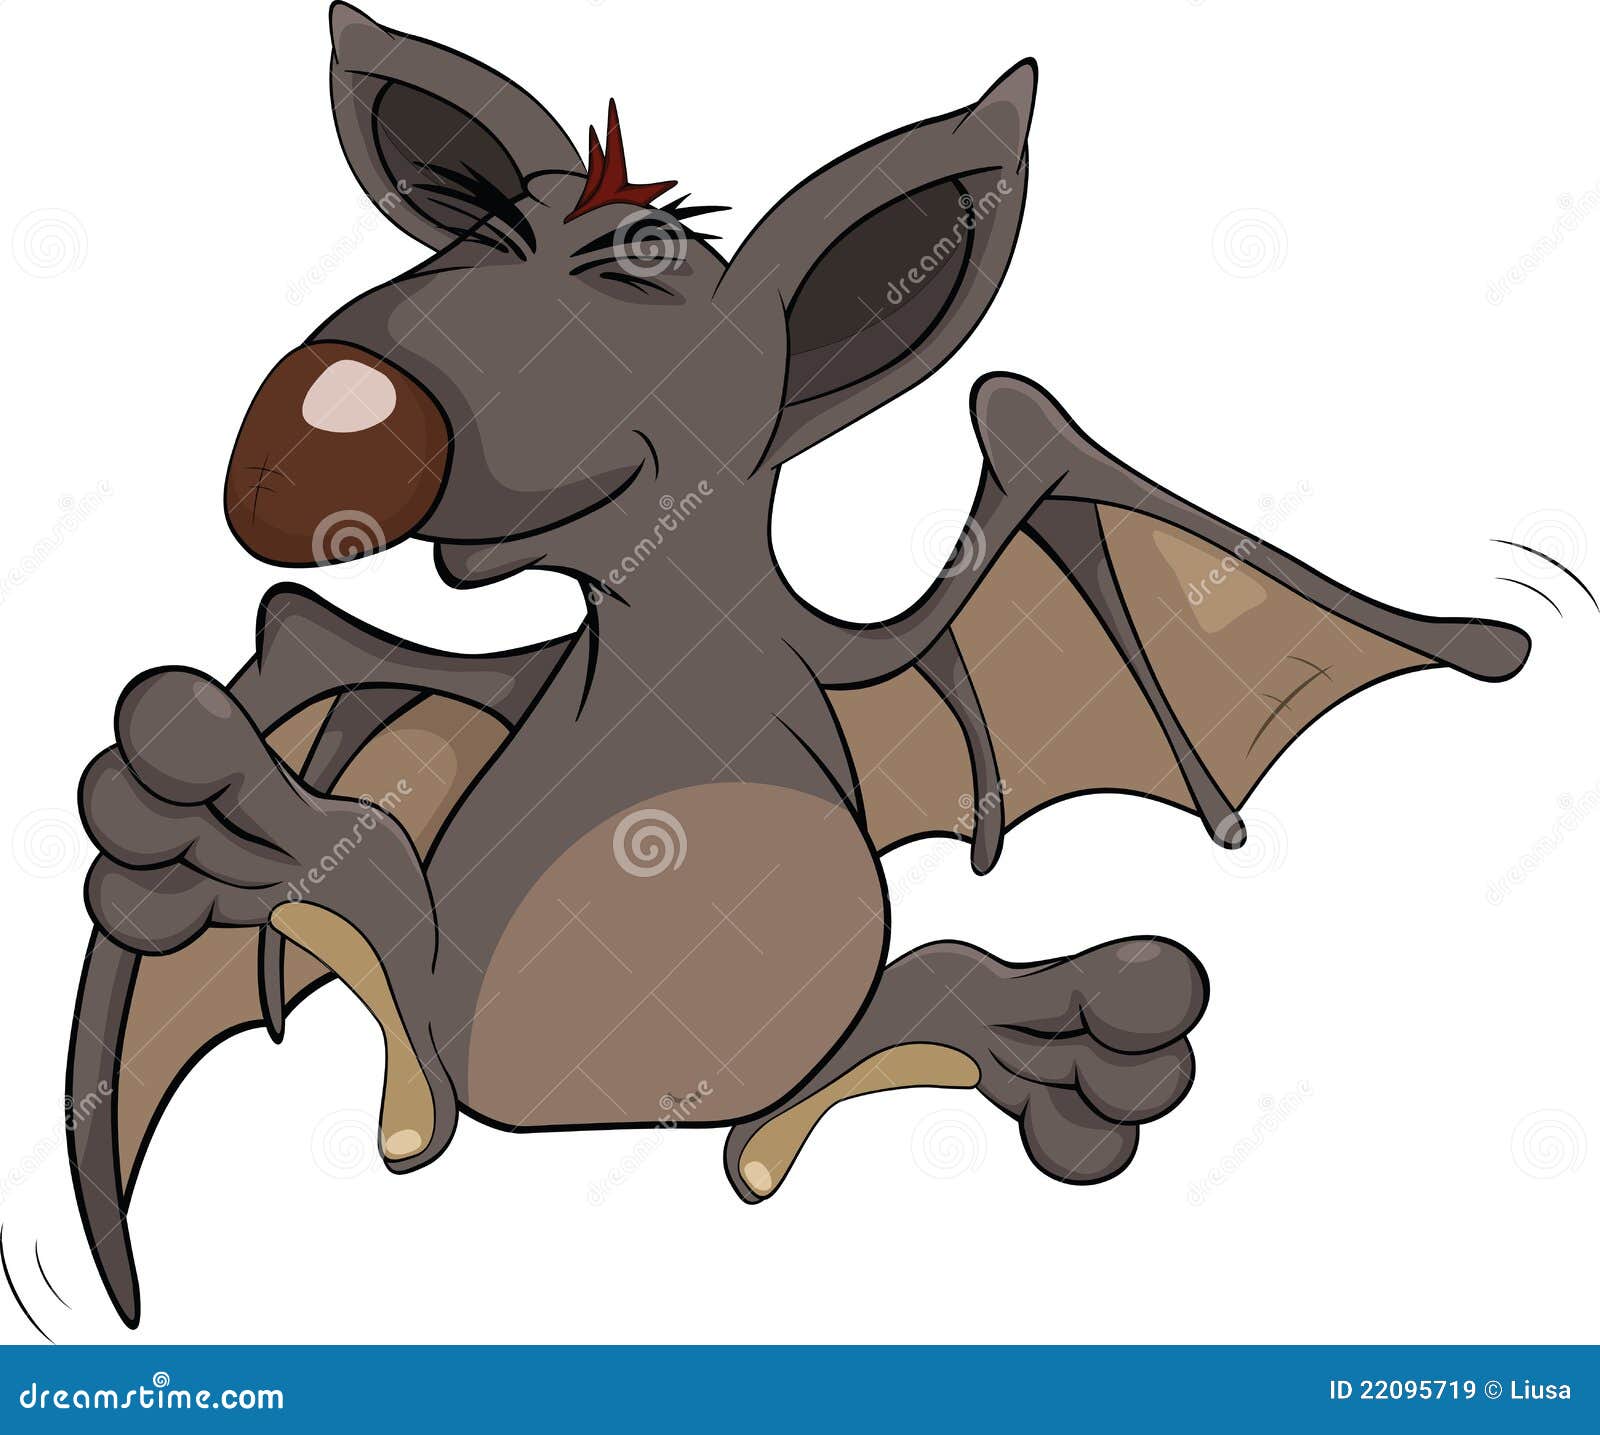 Little Cheerful Bat.Cartoon Royalty Free Stock Images ...